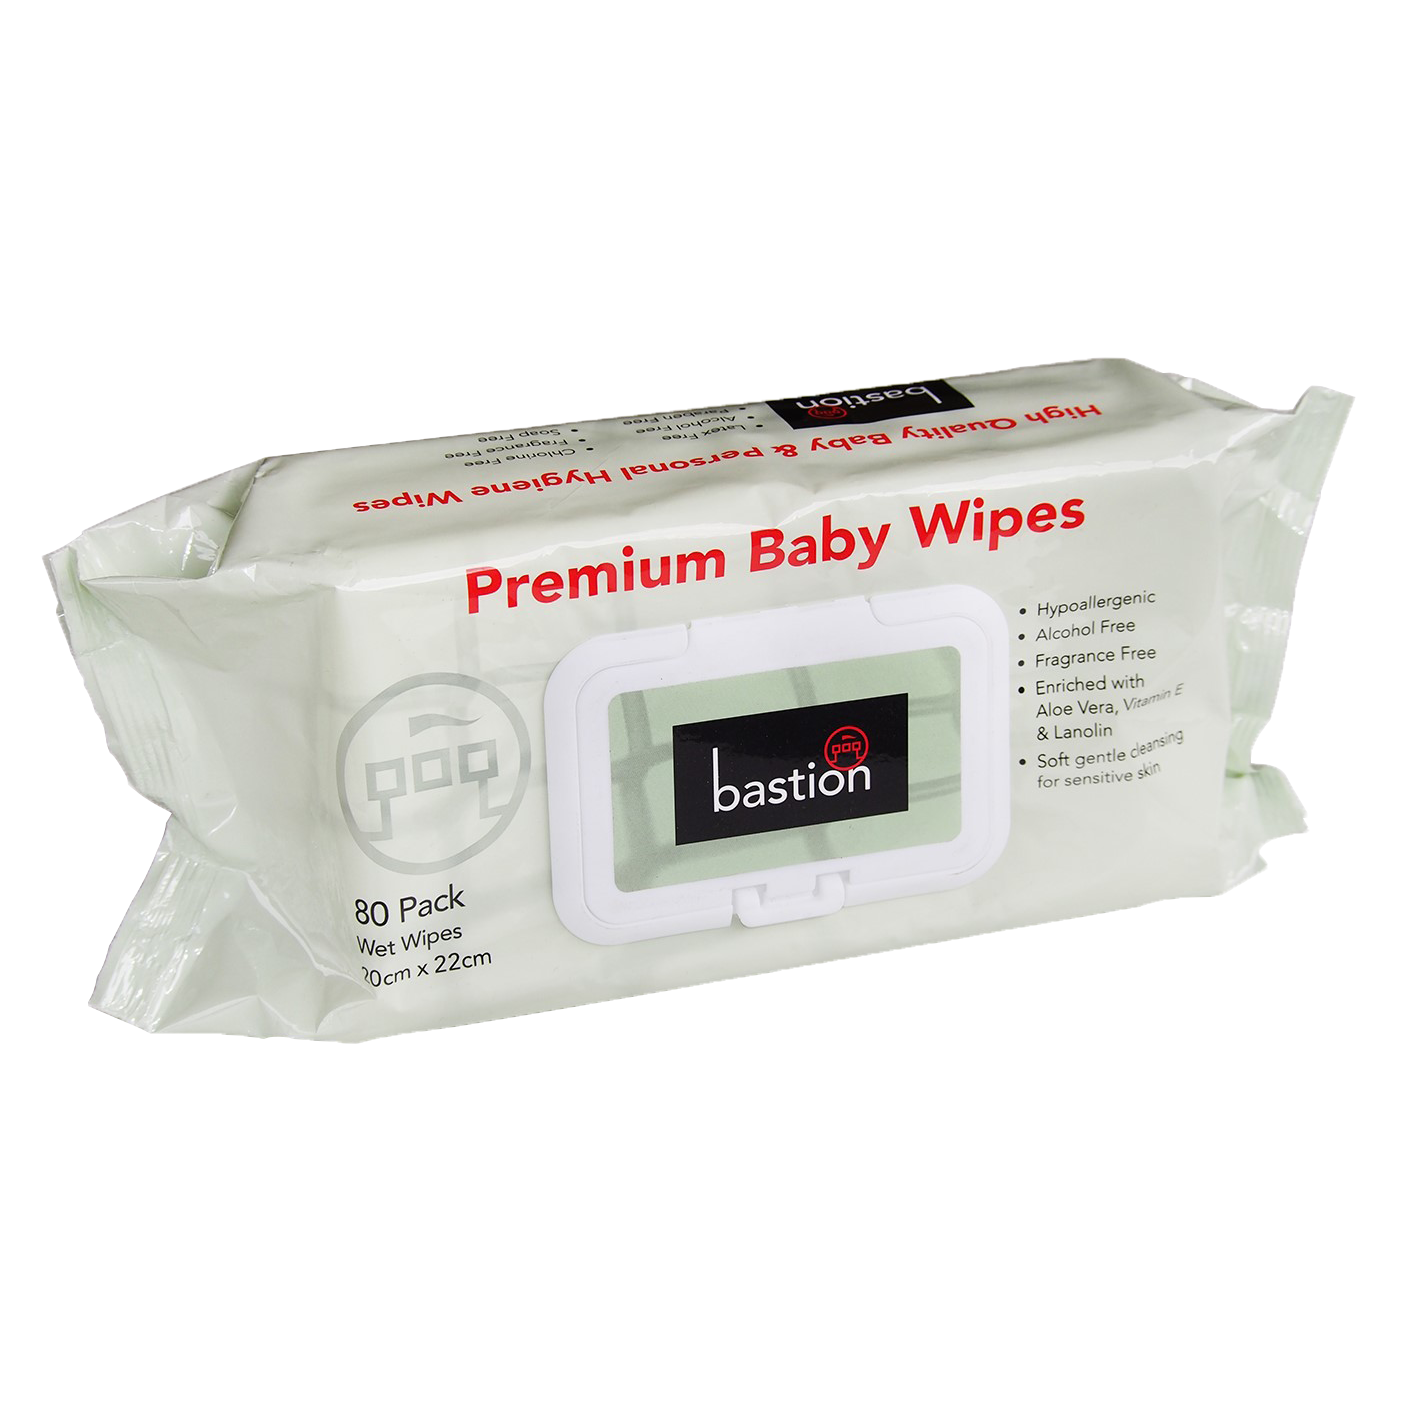 Bastion Premium Baby Wipes 80Pk